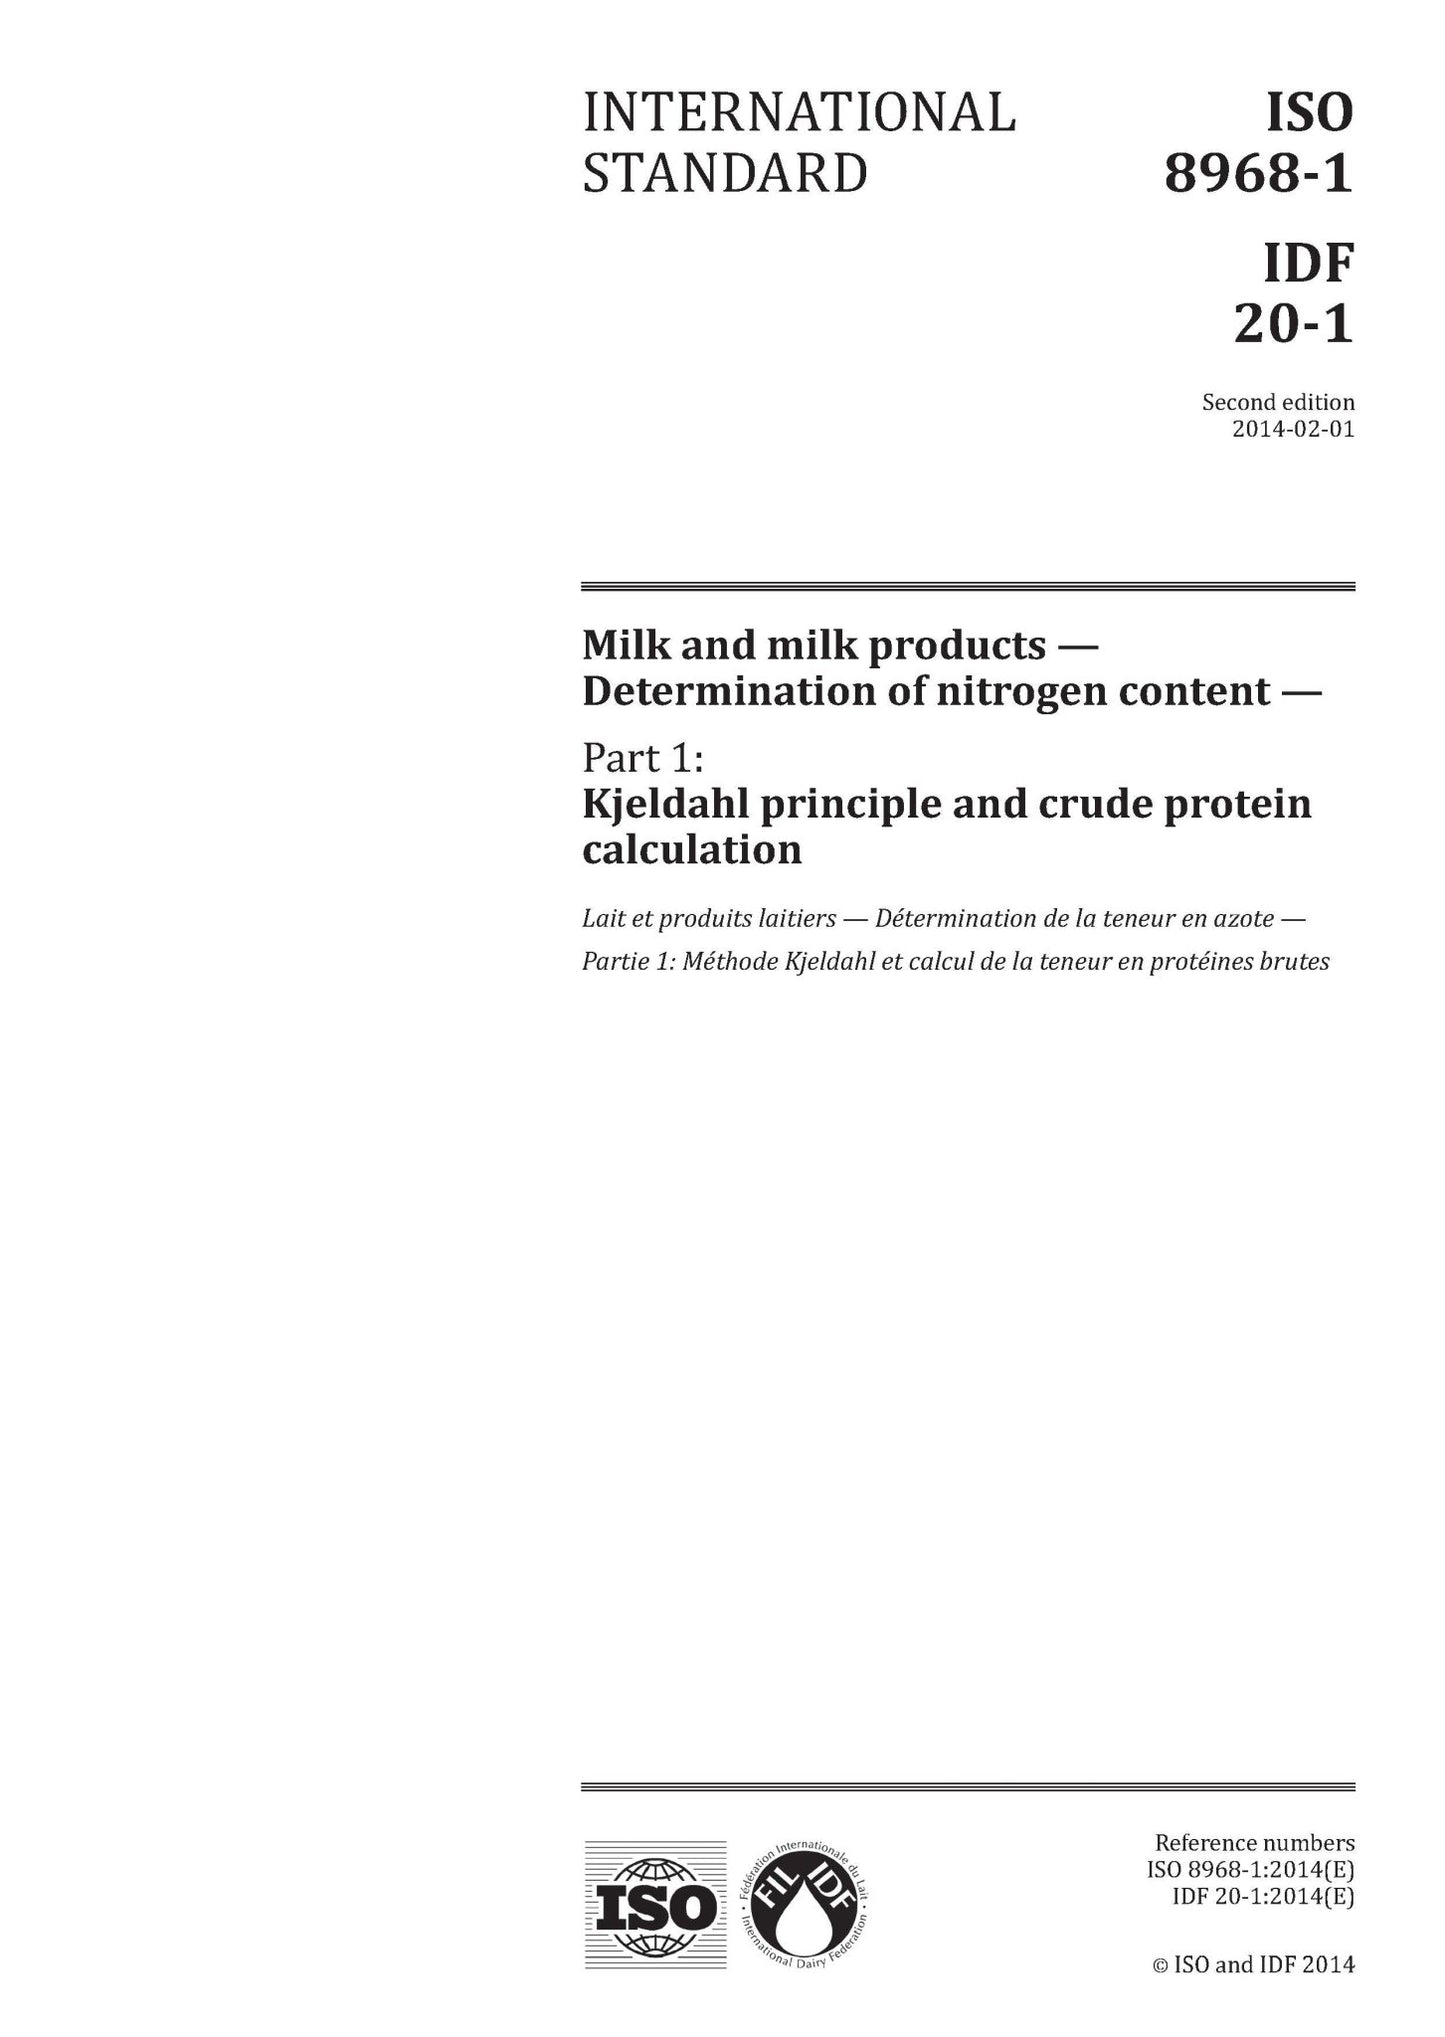 ISO 8968-1| IDF 20-1: 2014 - Milk and milk products - Determination of nitrogen content - Part 1: Kjeldahl principle and crude protein calculation - FIL-IDF